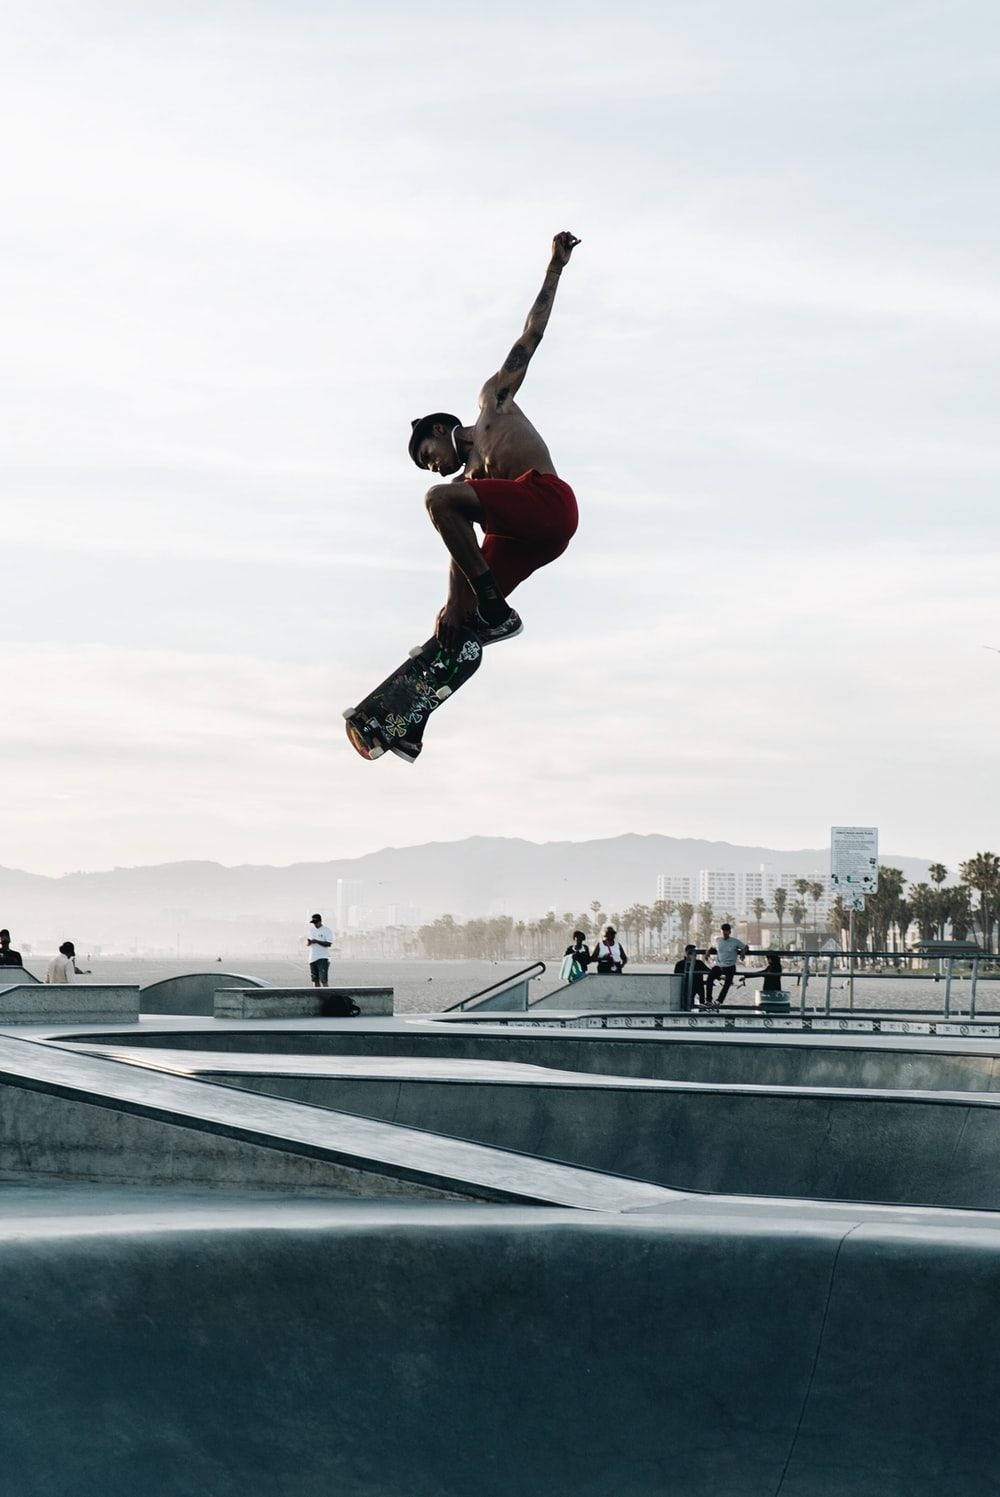 Aesthetic Skateboard In The Air